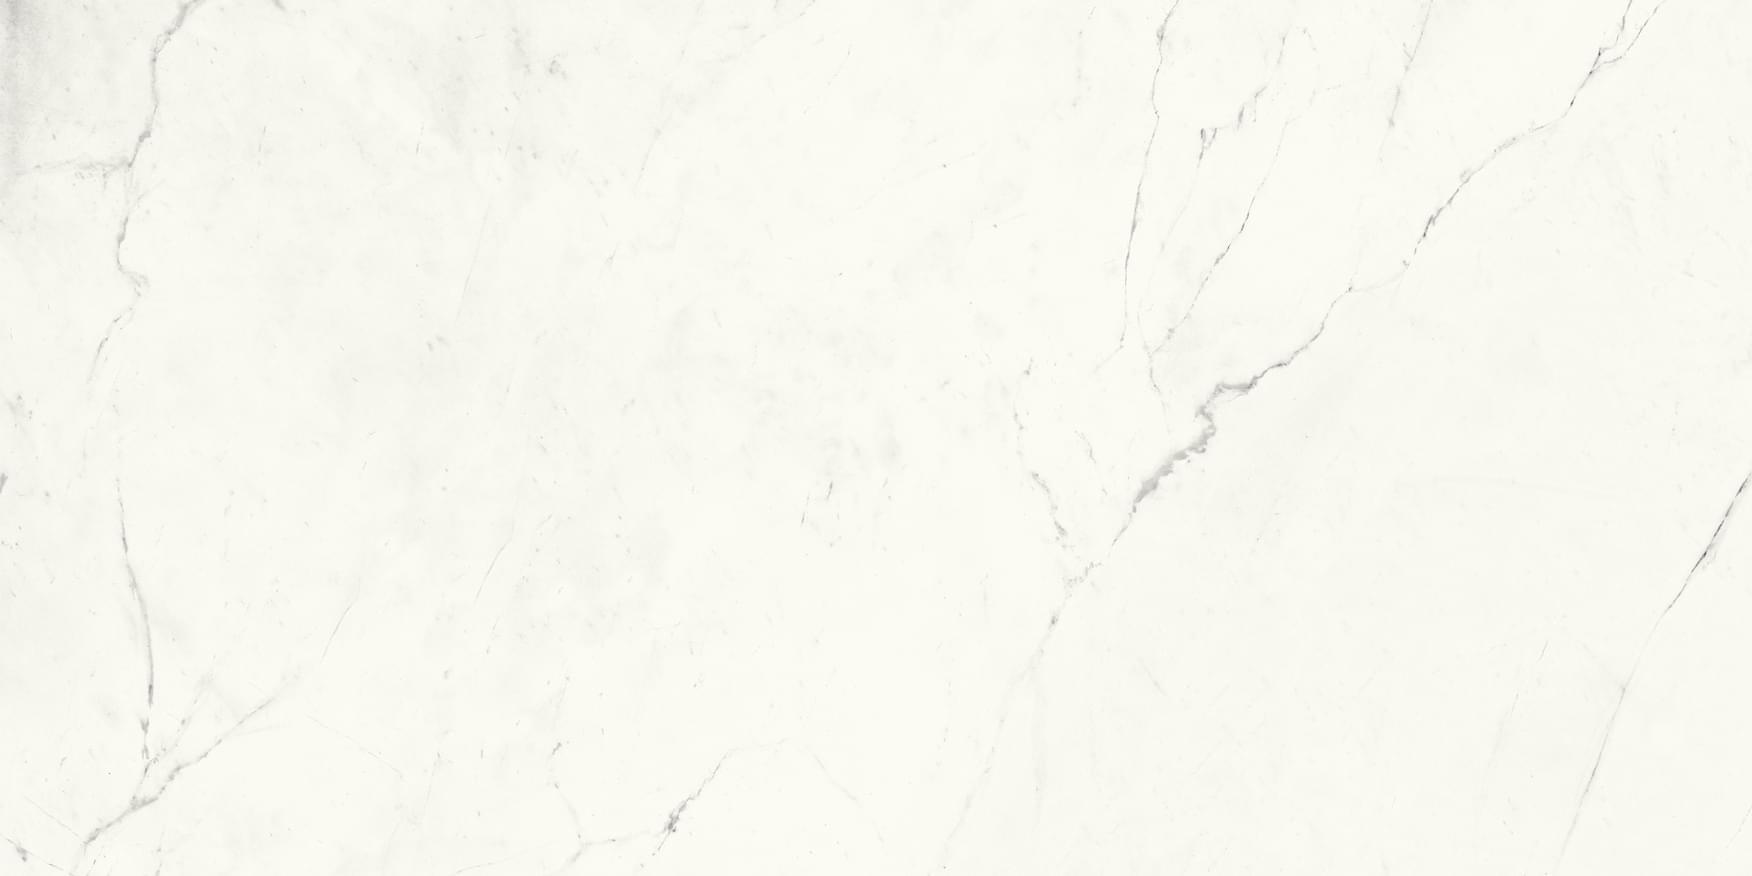 Kerlite Vanity Bianco Luce 60x120